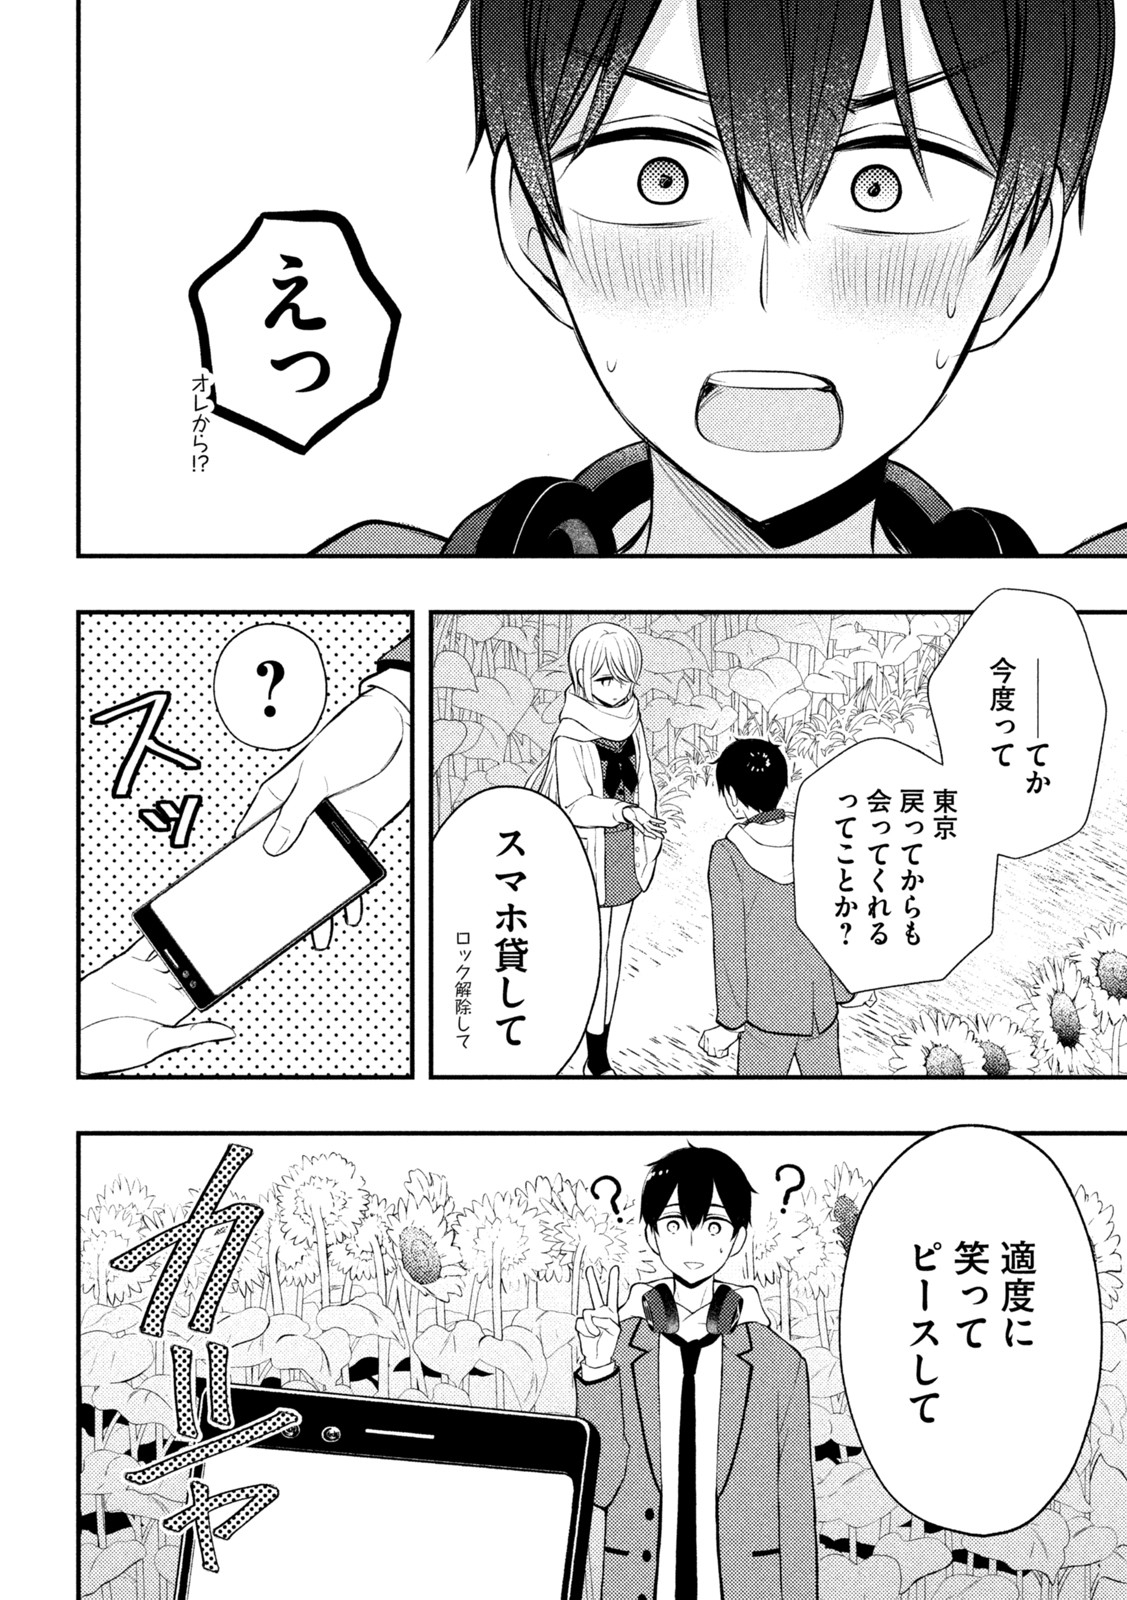 Watari-kun no xx ga Houkai Sunzen - Chapter 72 - Page 28